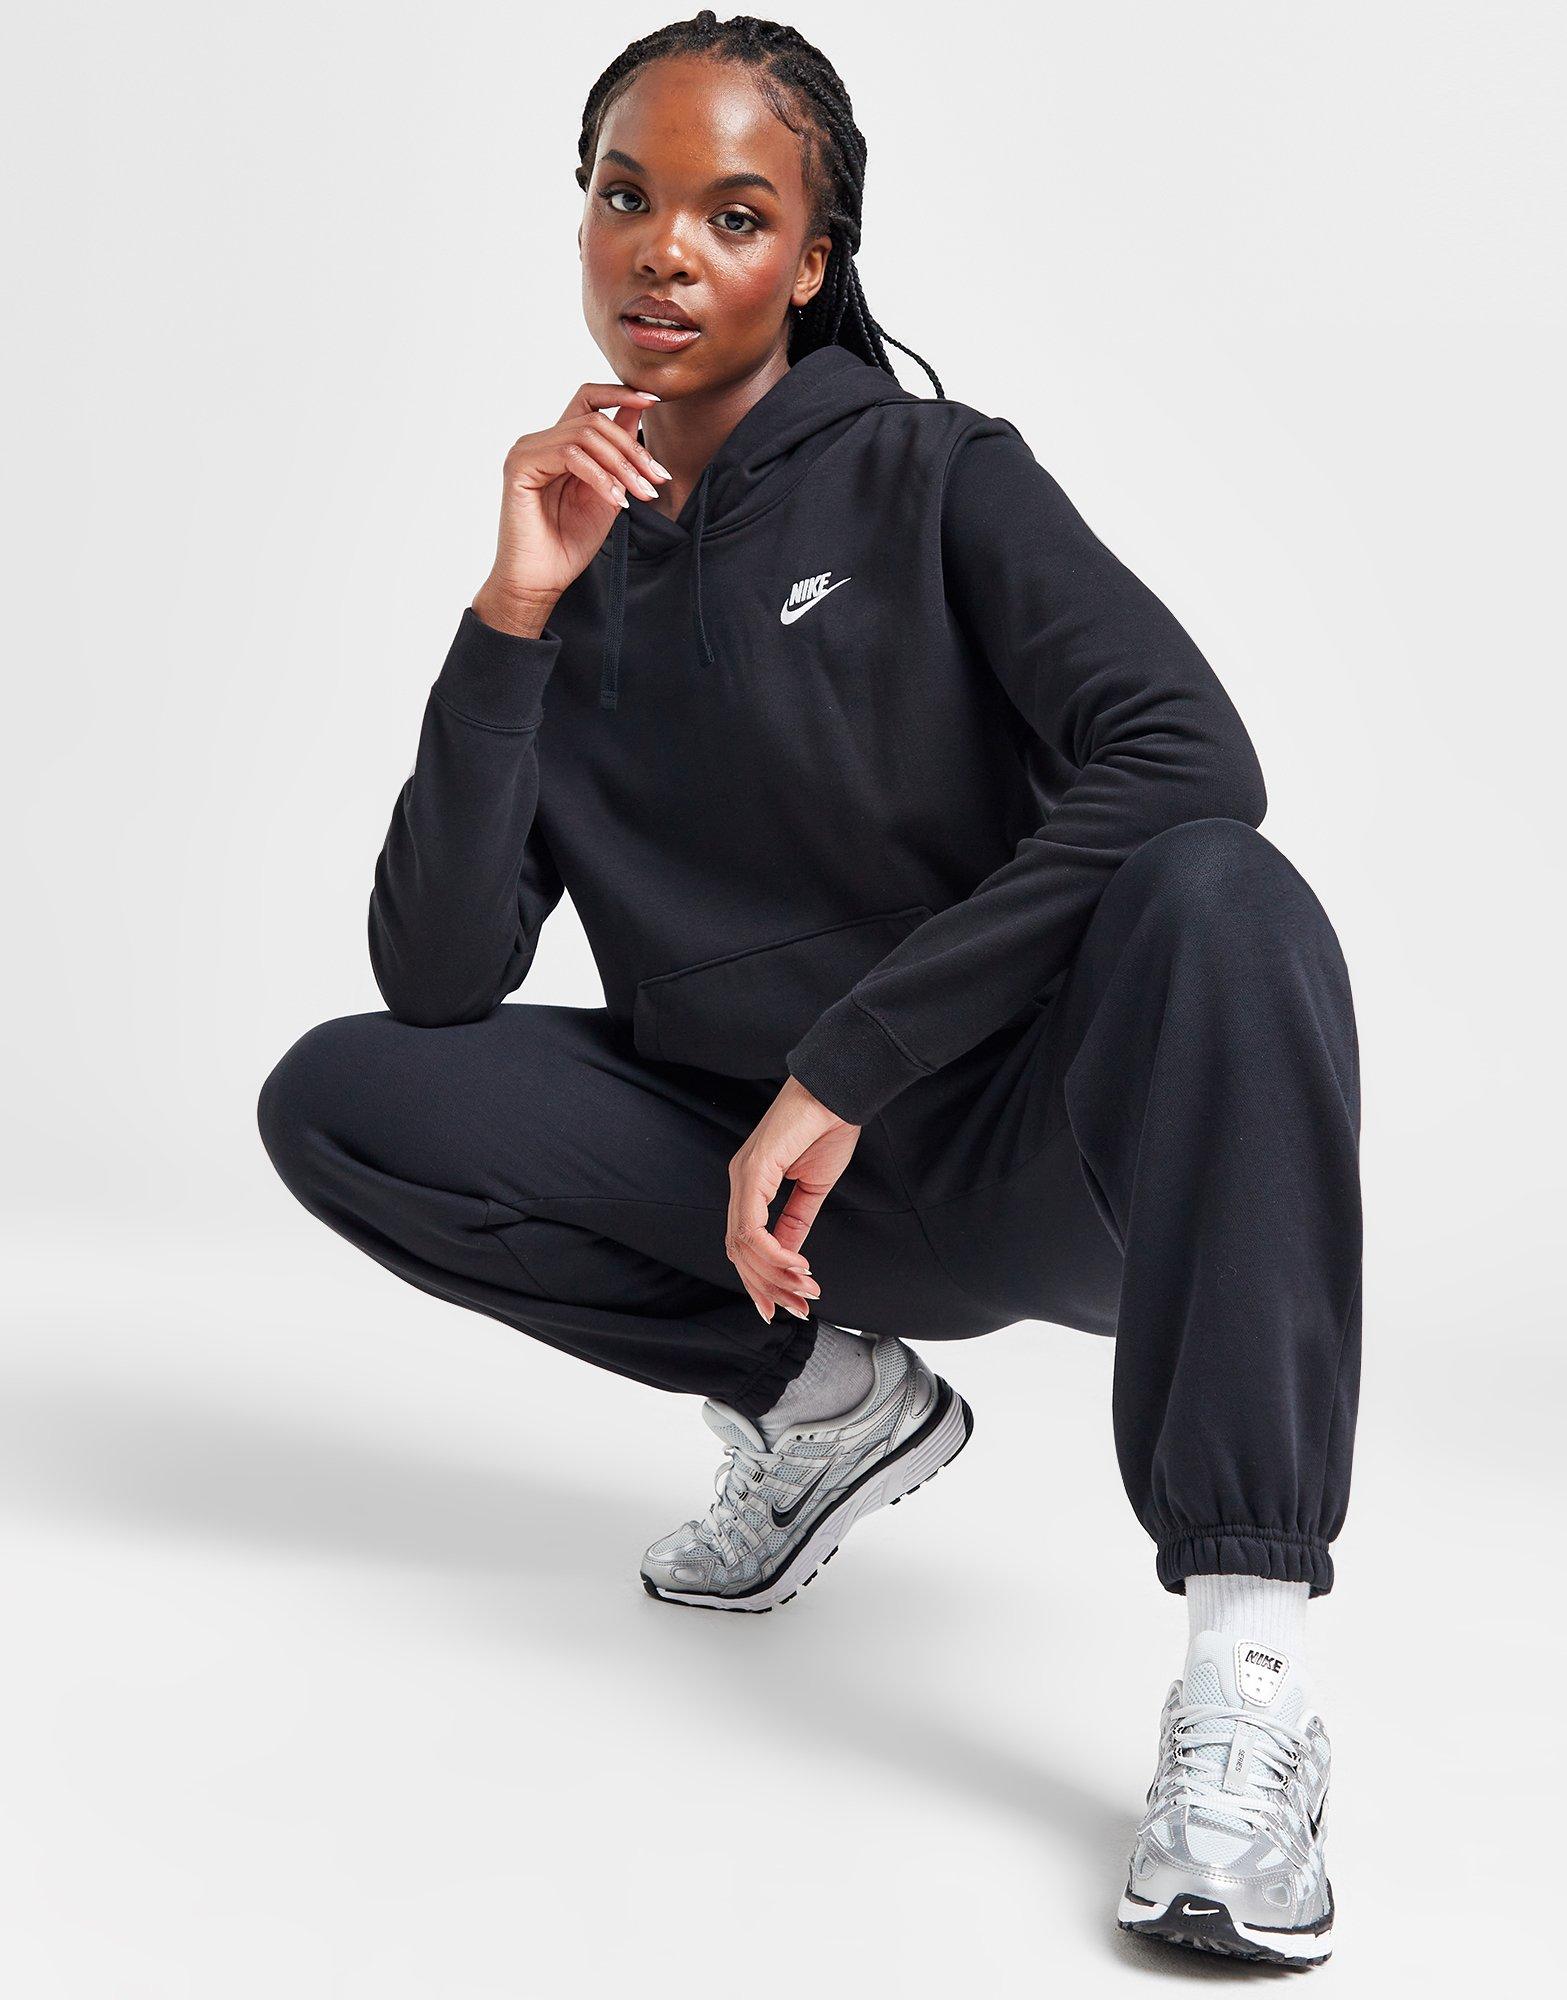 Black Nike Sportswear Max 90 T-Shirt | size? - Wishupon